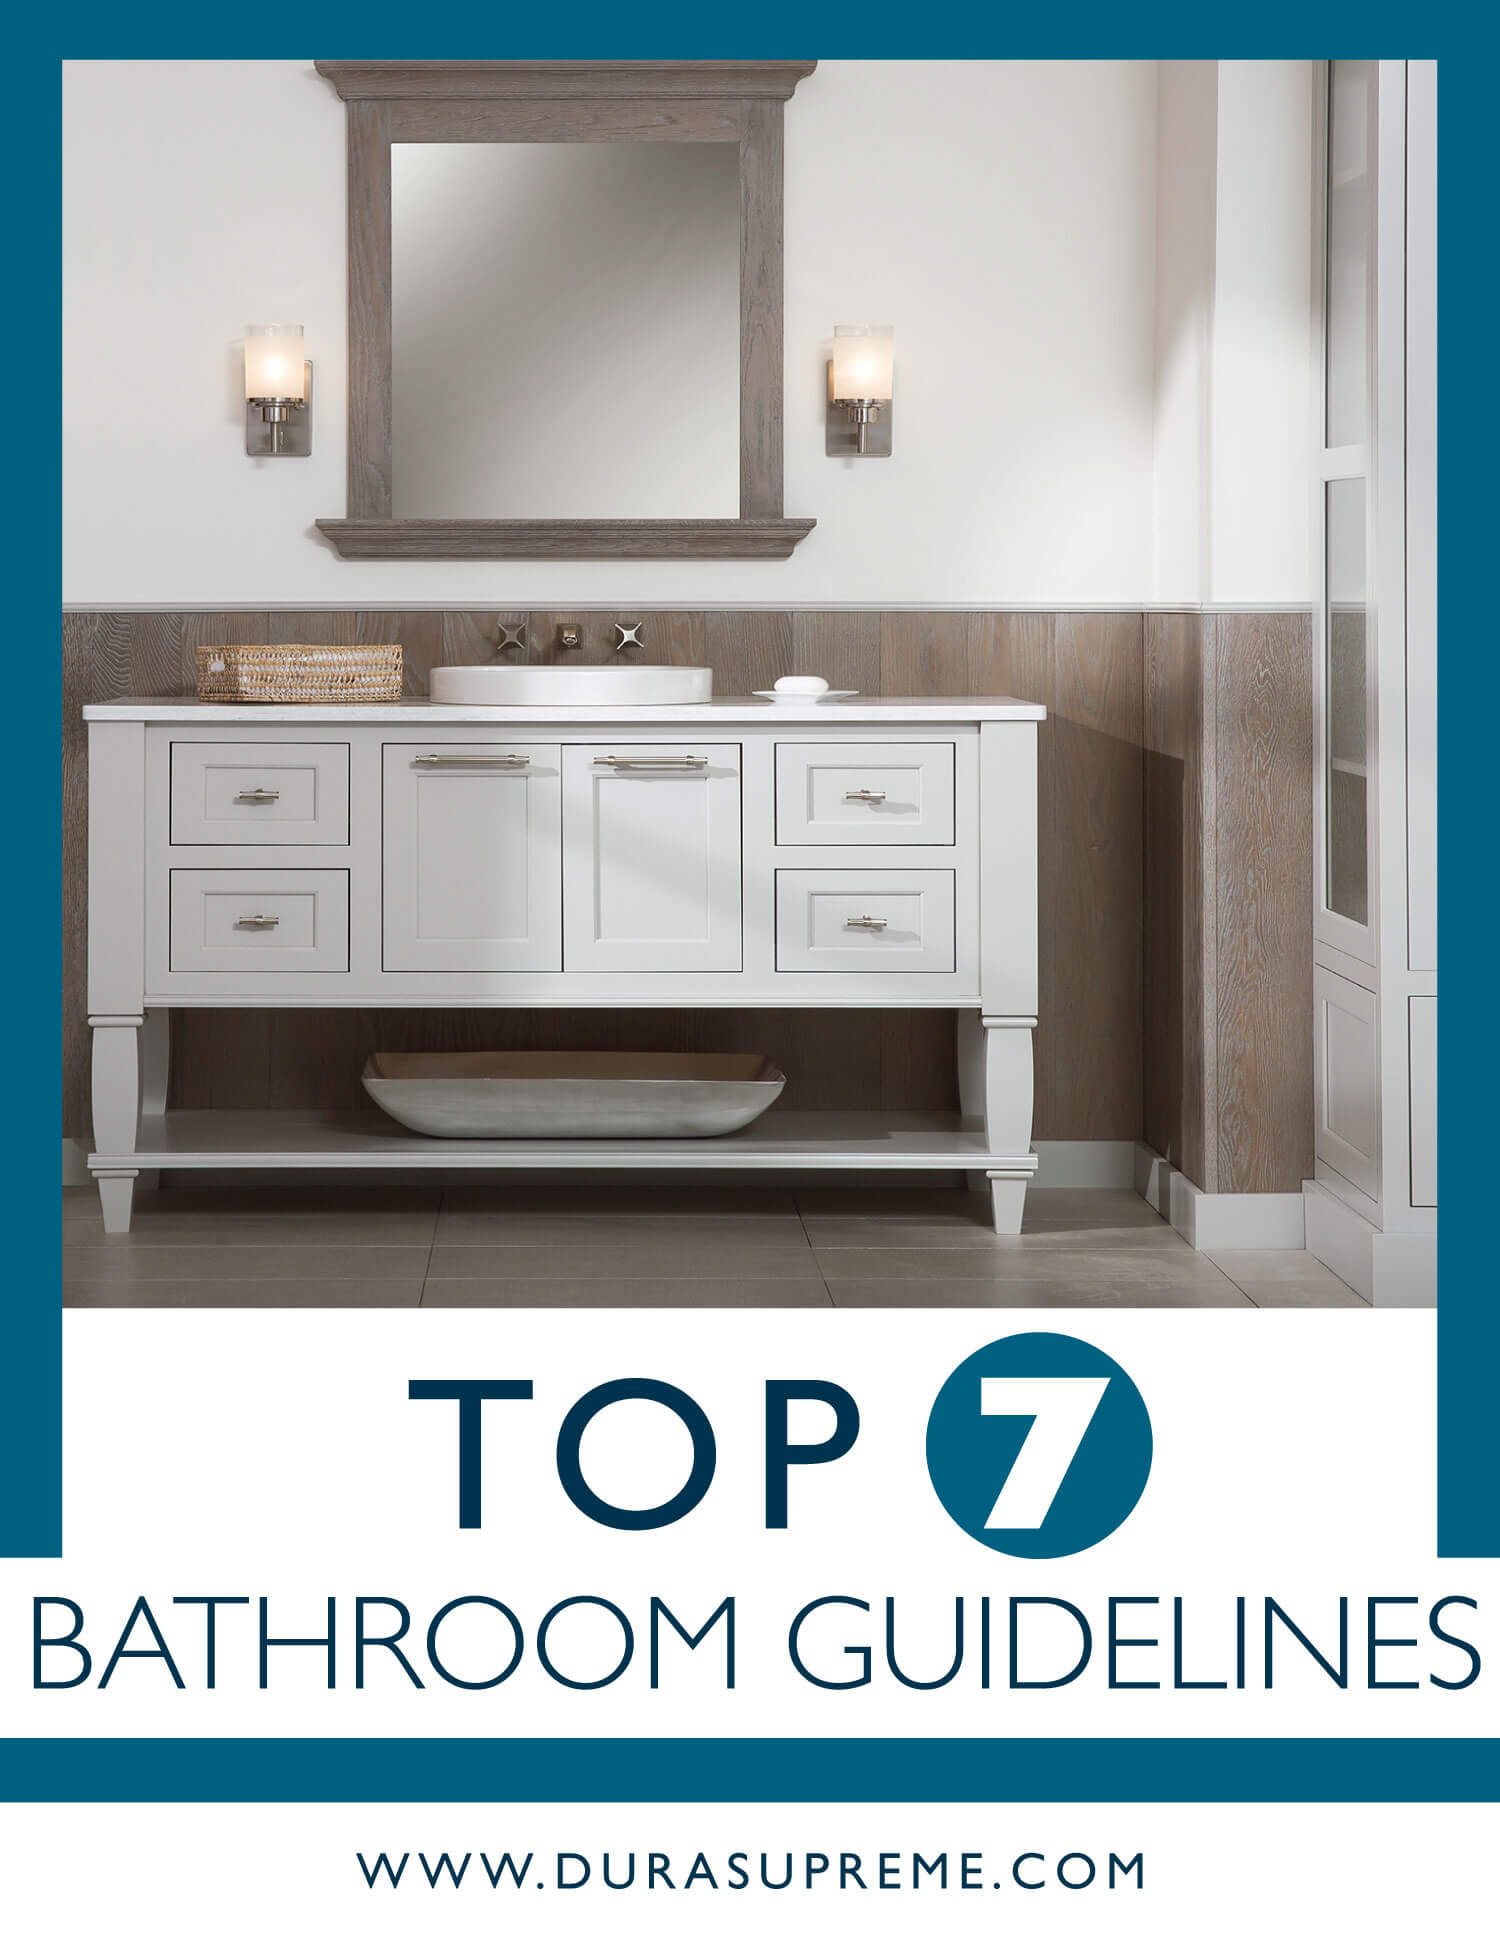 Top 7 Bathroom Design Guidelines. Dura Supreme Cabinetry Blog